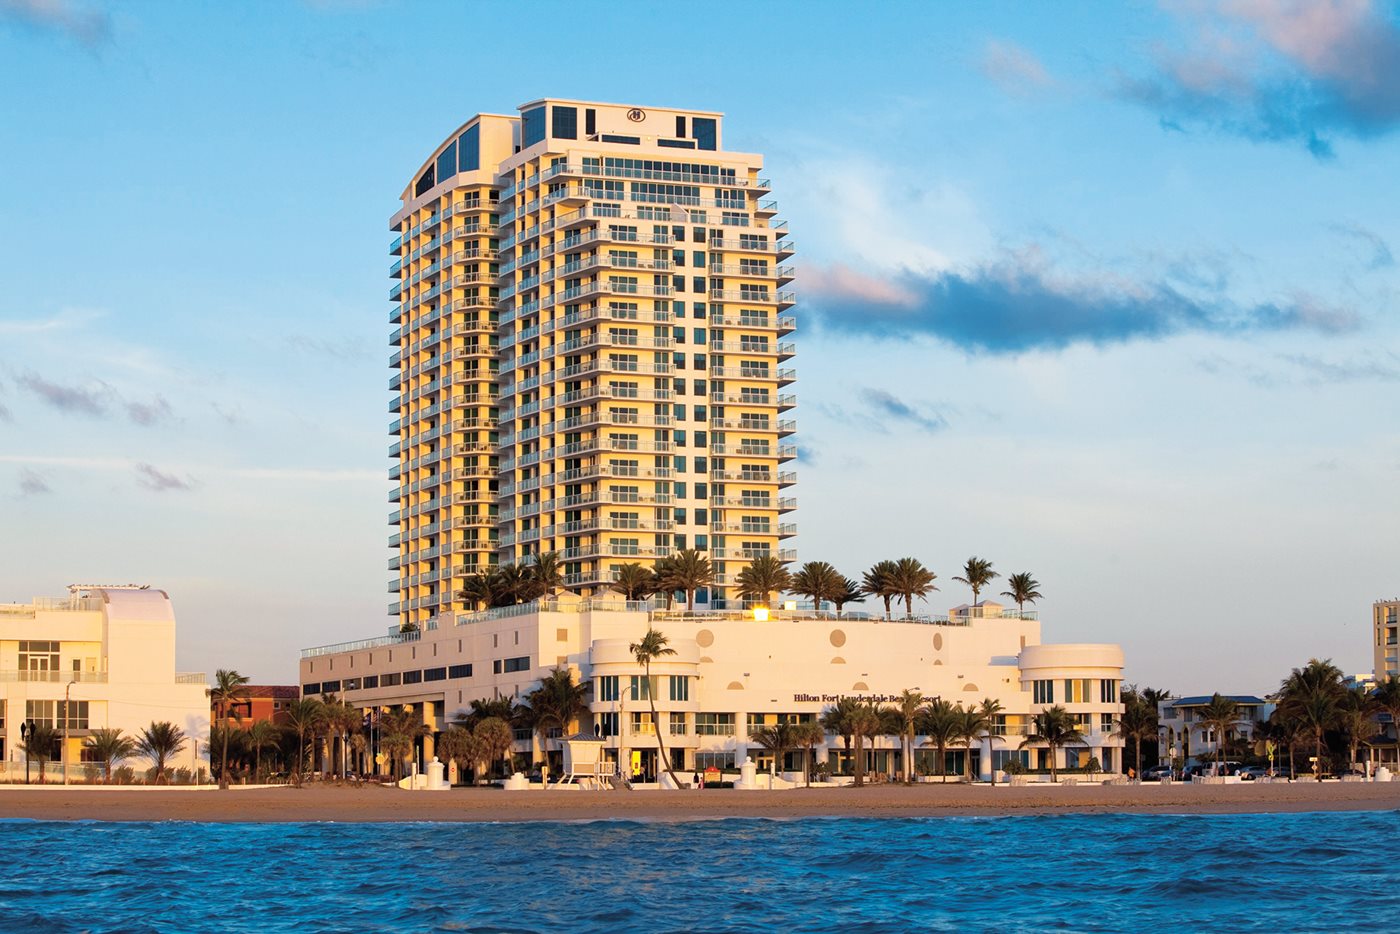 Hilton Fort Lauderdale Beach